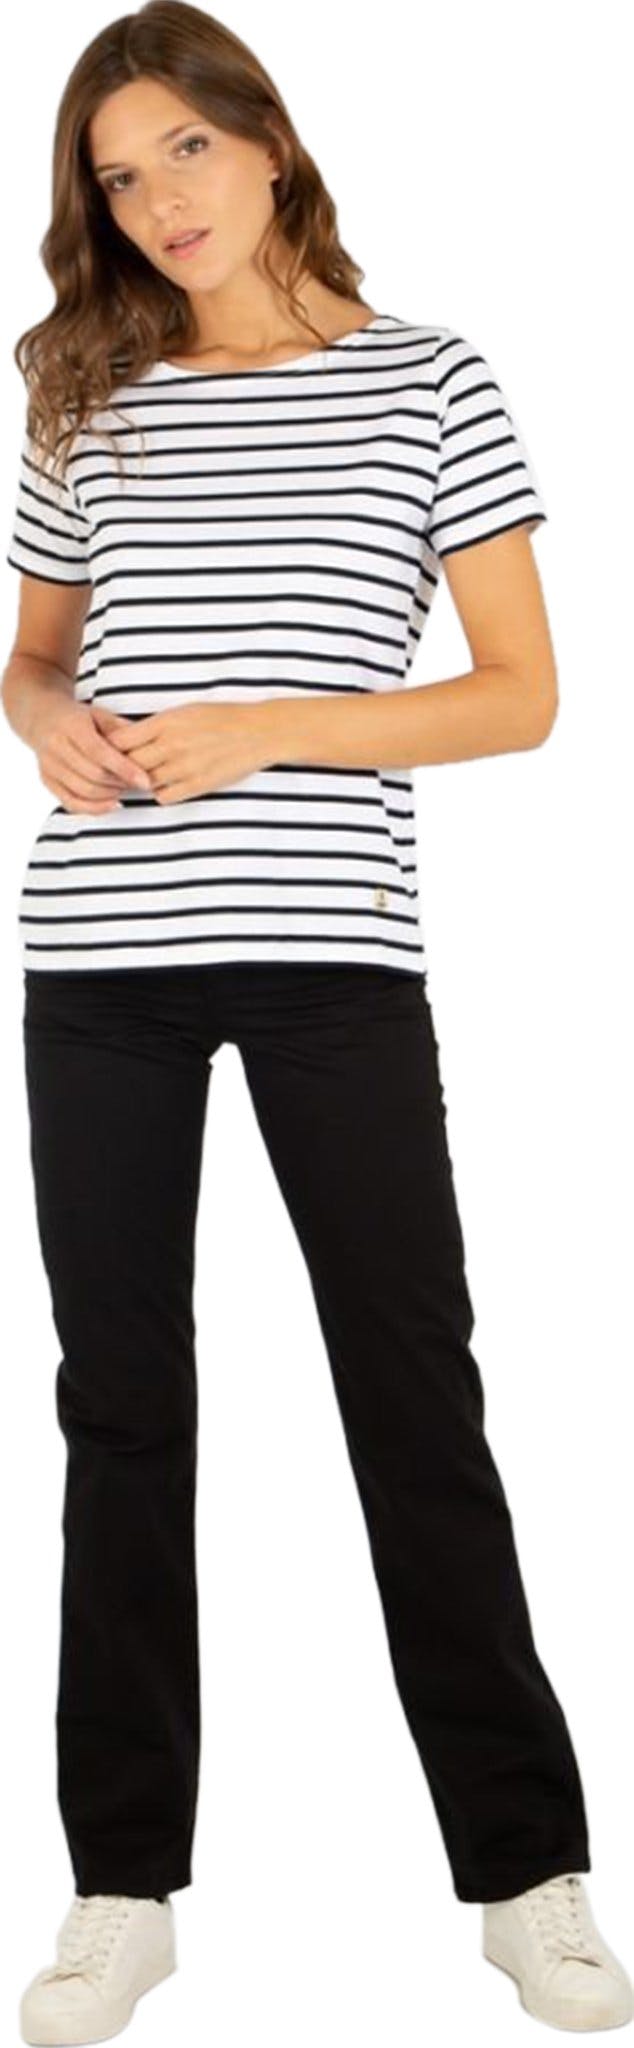 Product image for Hoédic Lightweight Breton Striped Cotton Jersey - Women's